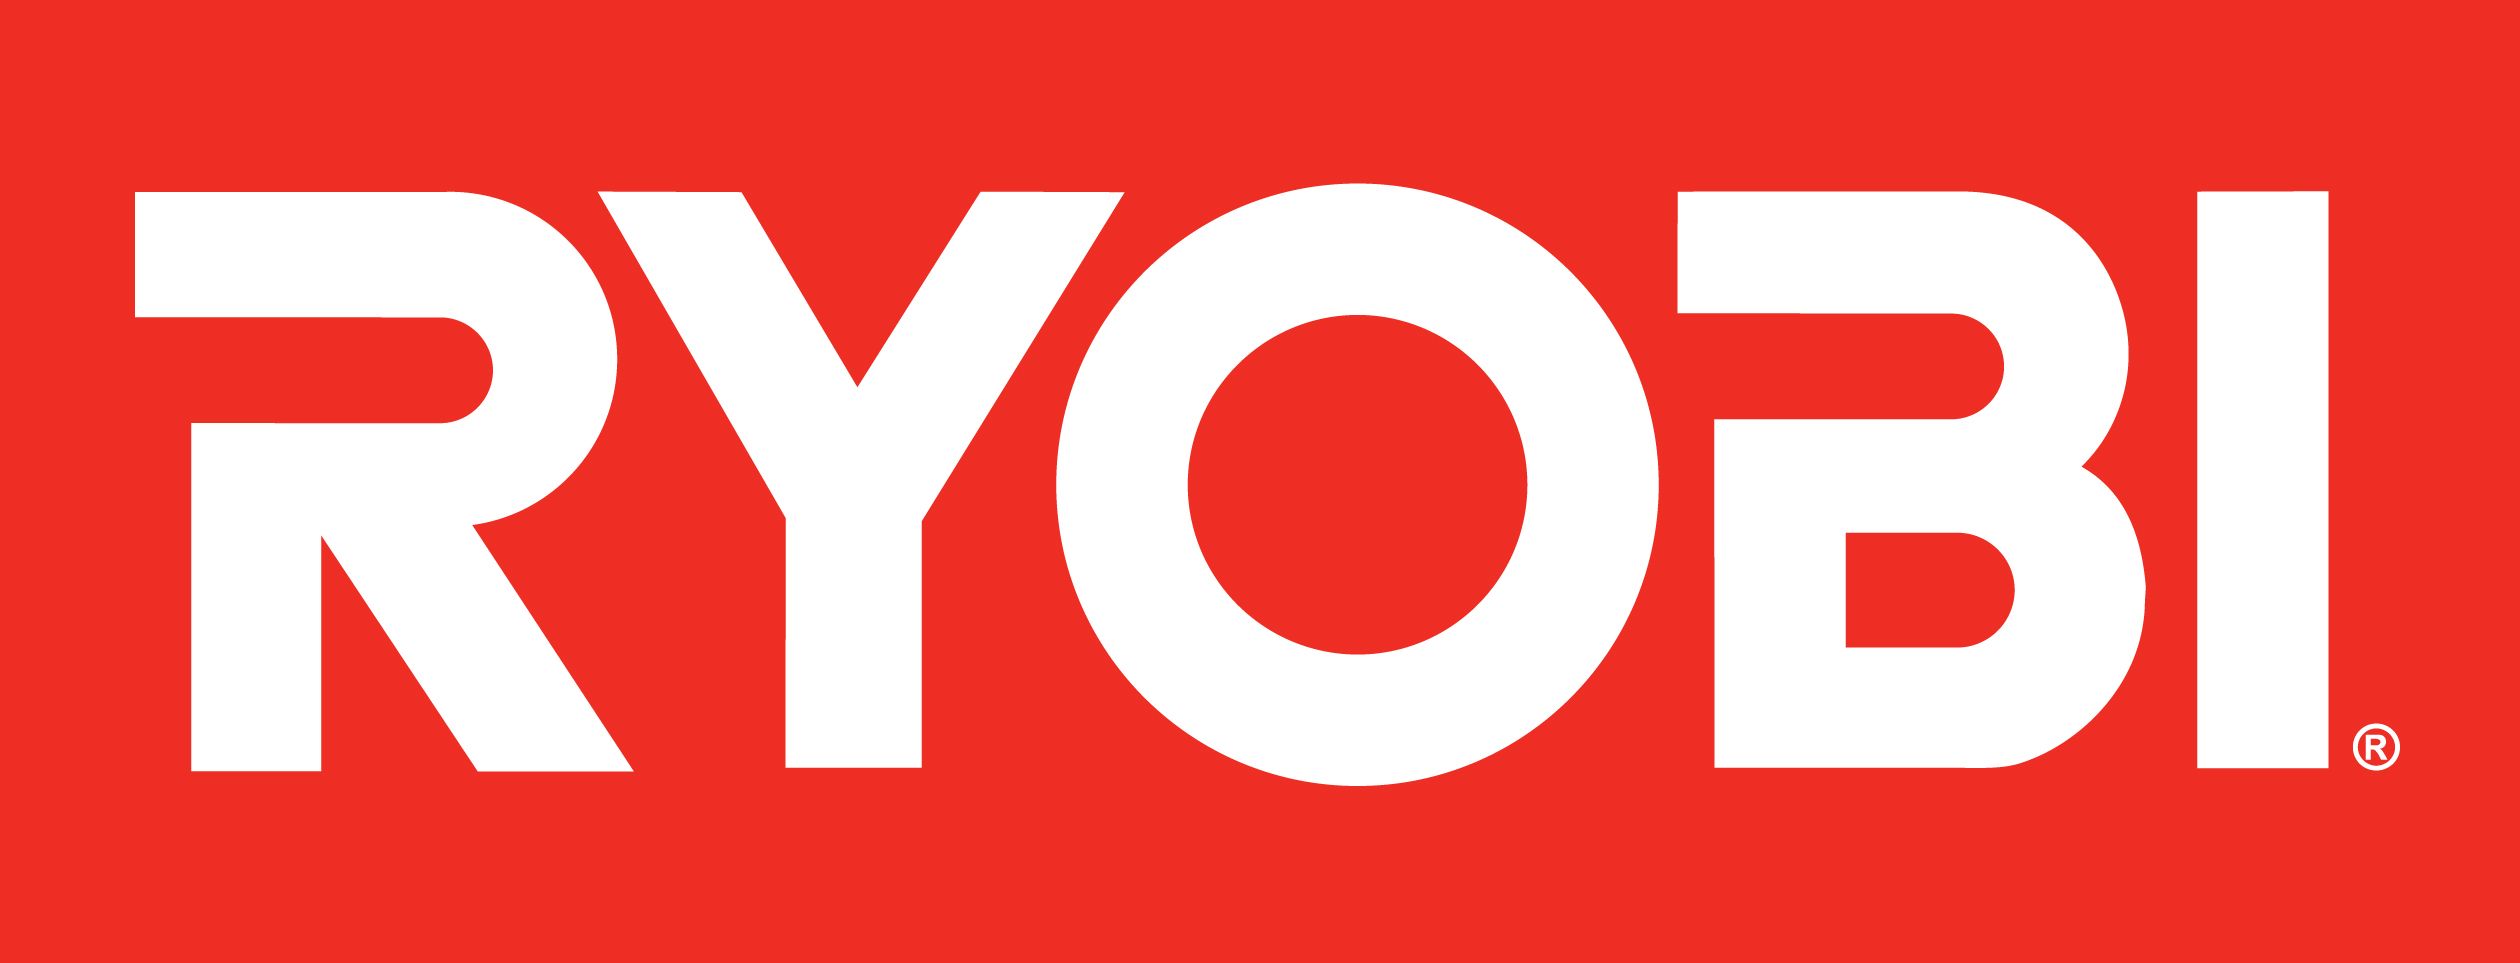 Логотип Ryobi (Риоби)